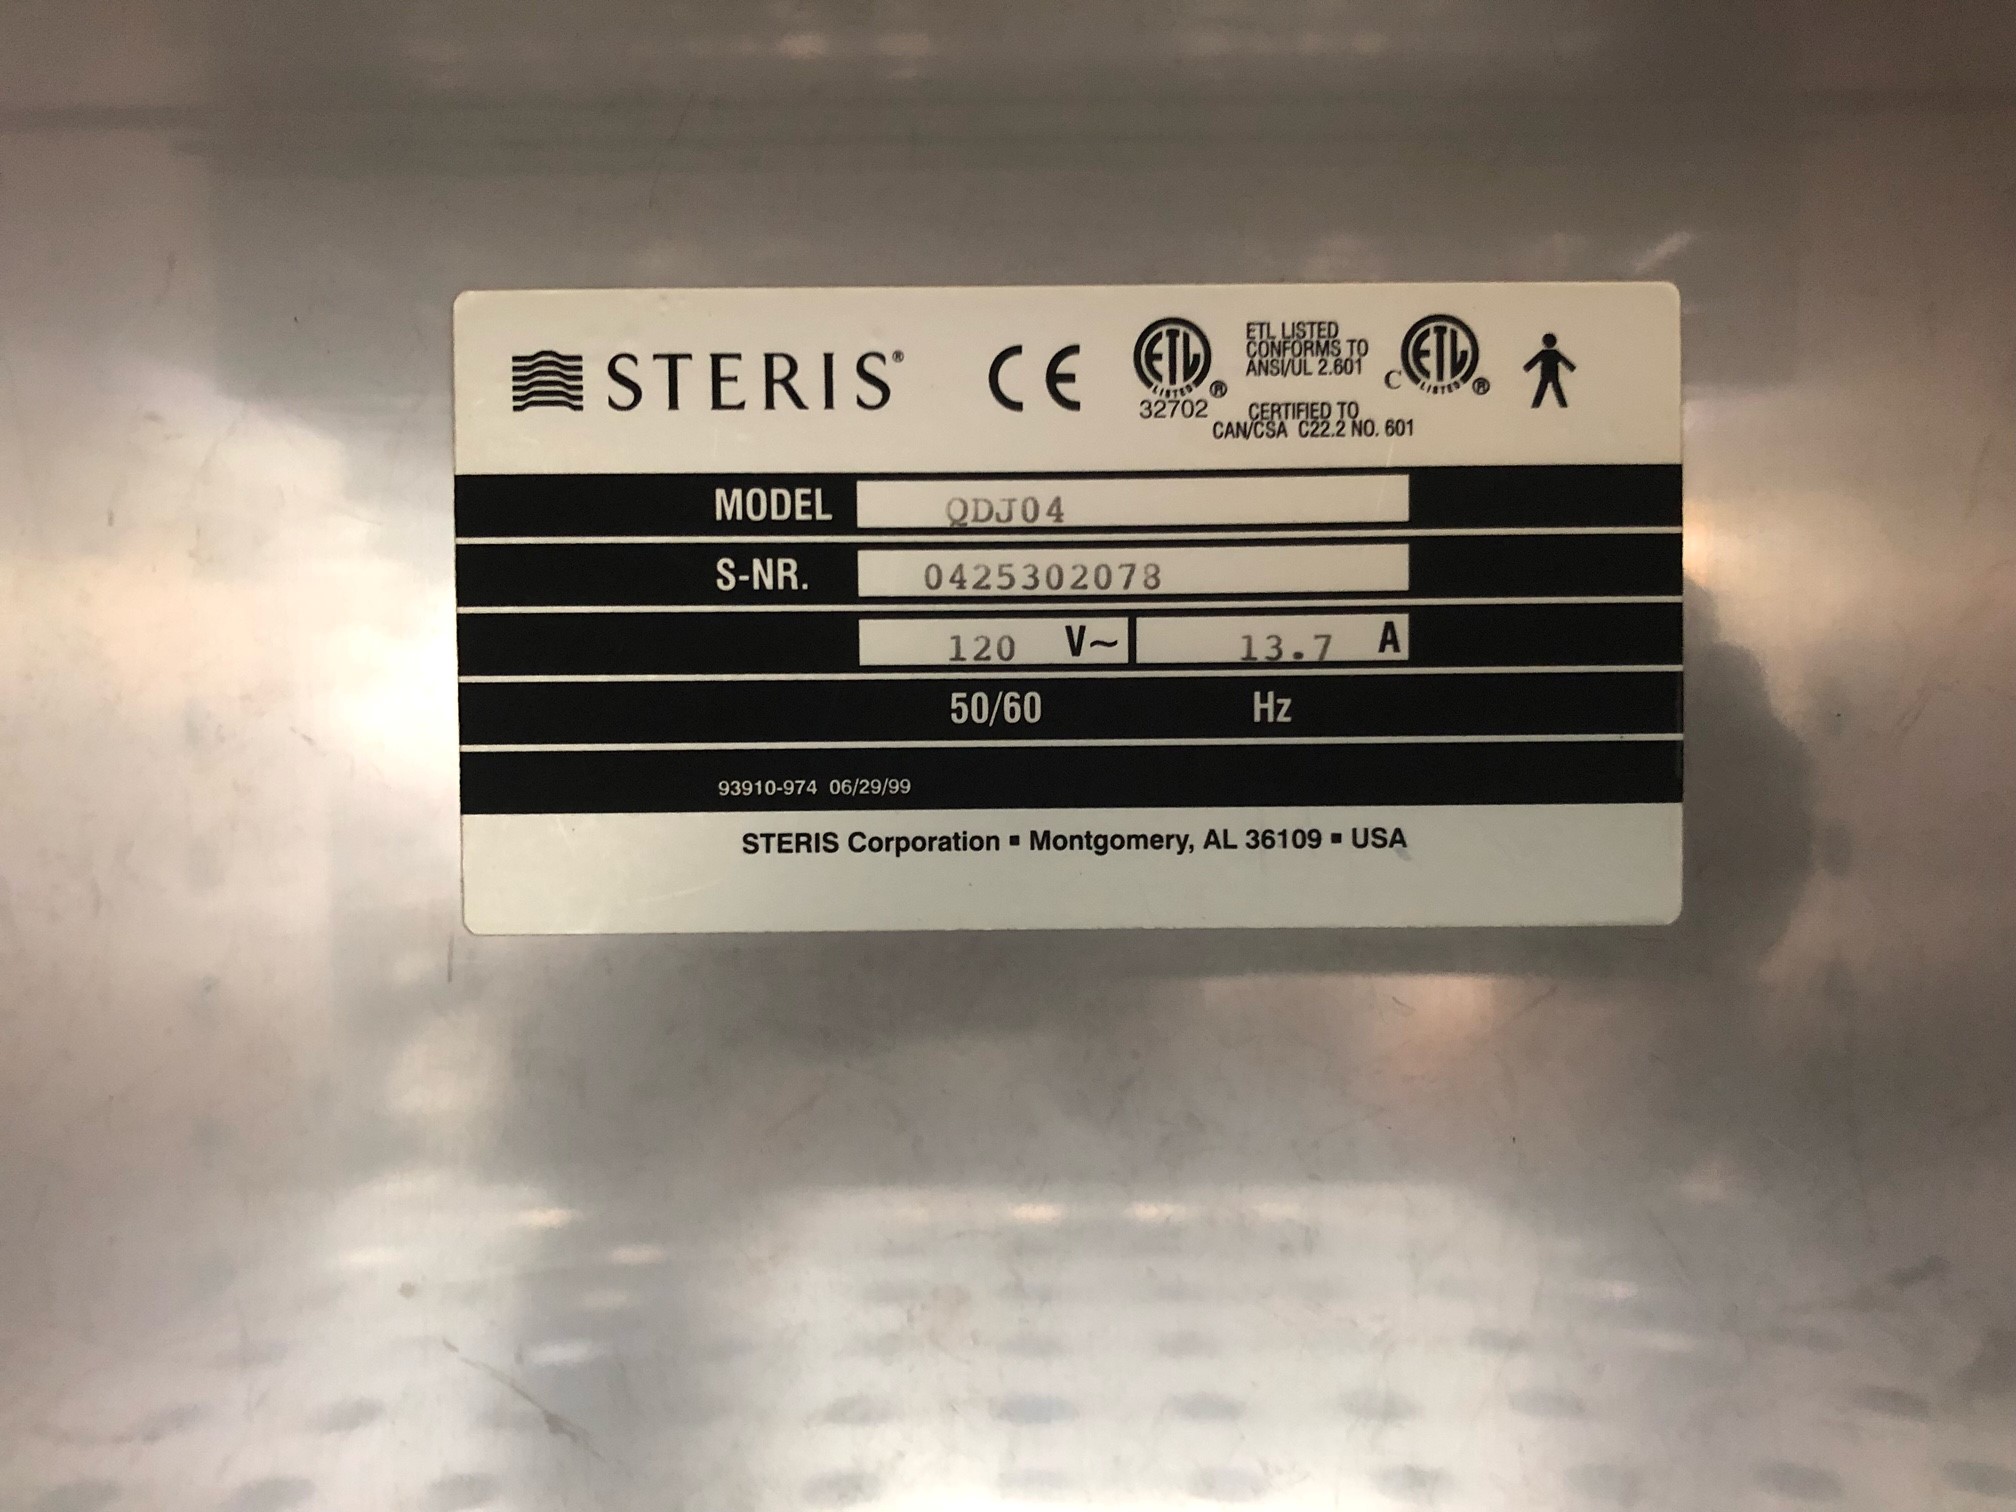 Steris/Amsco QDJ04 Warming Cabinet